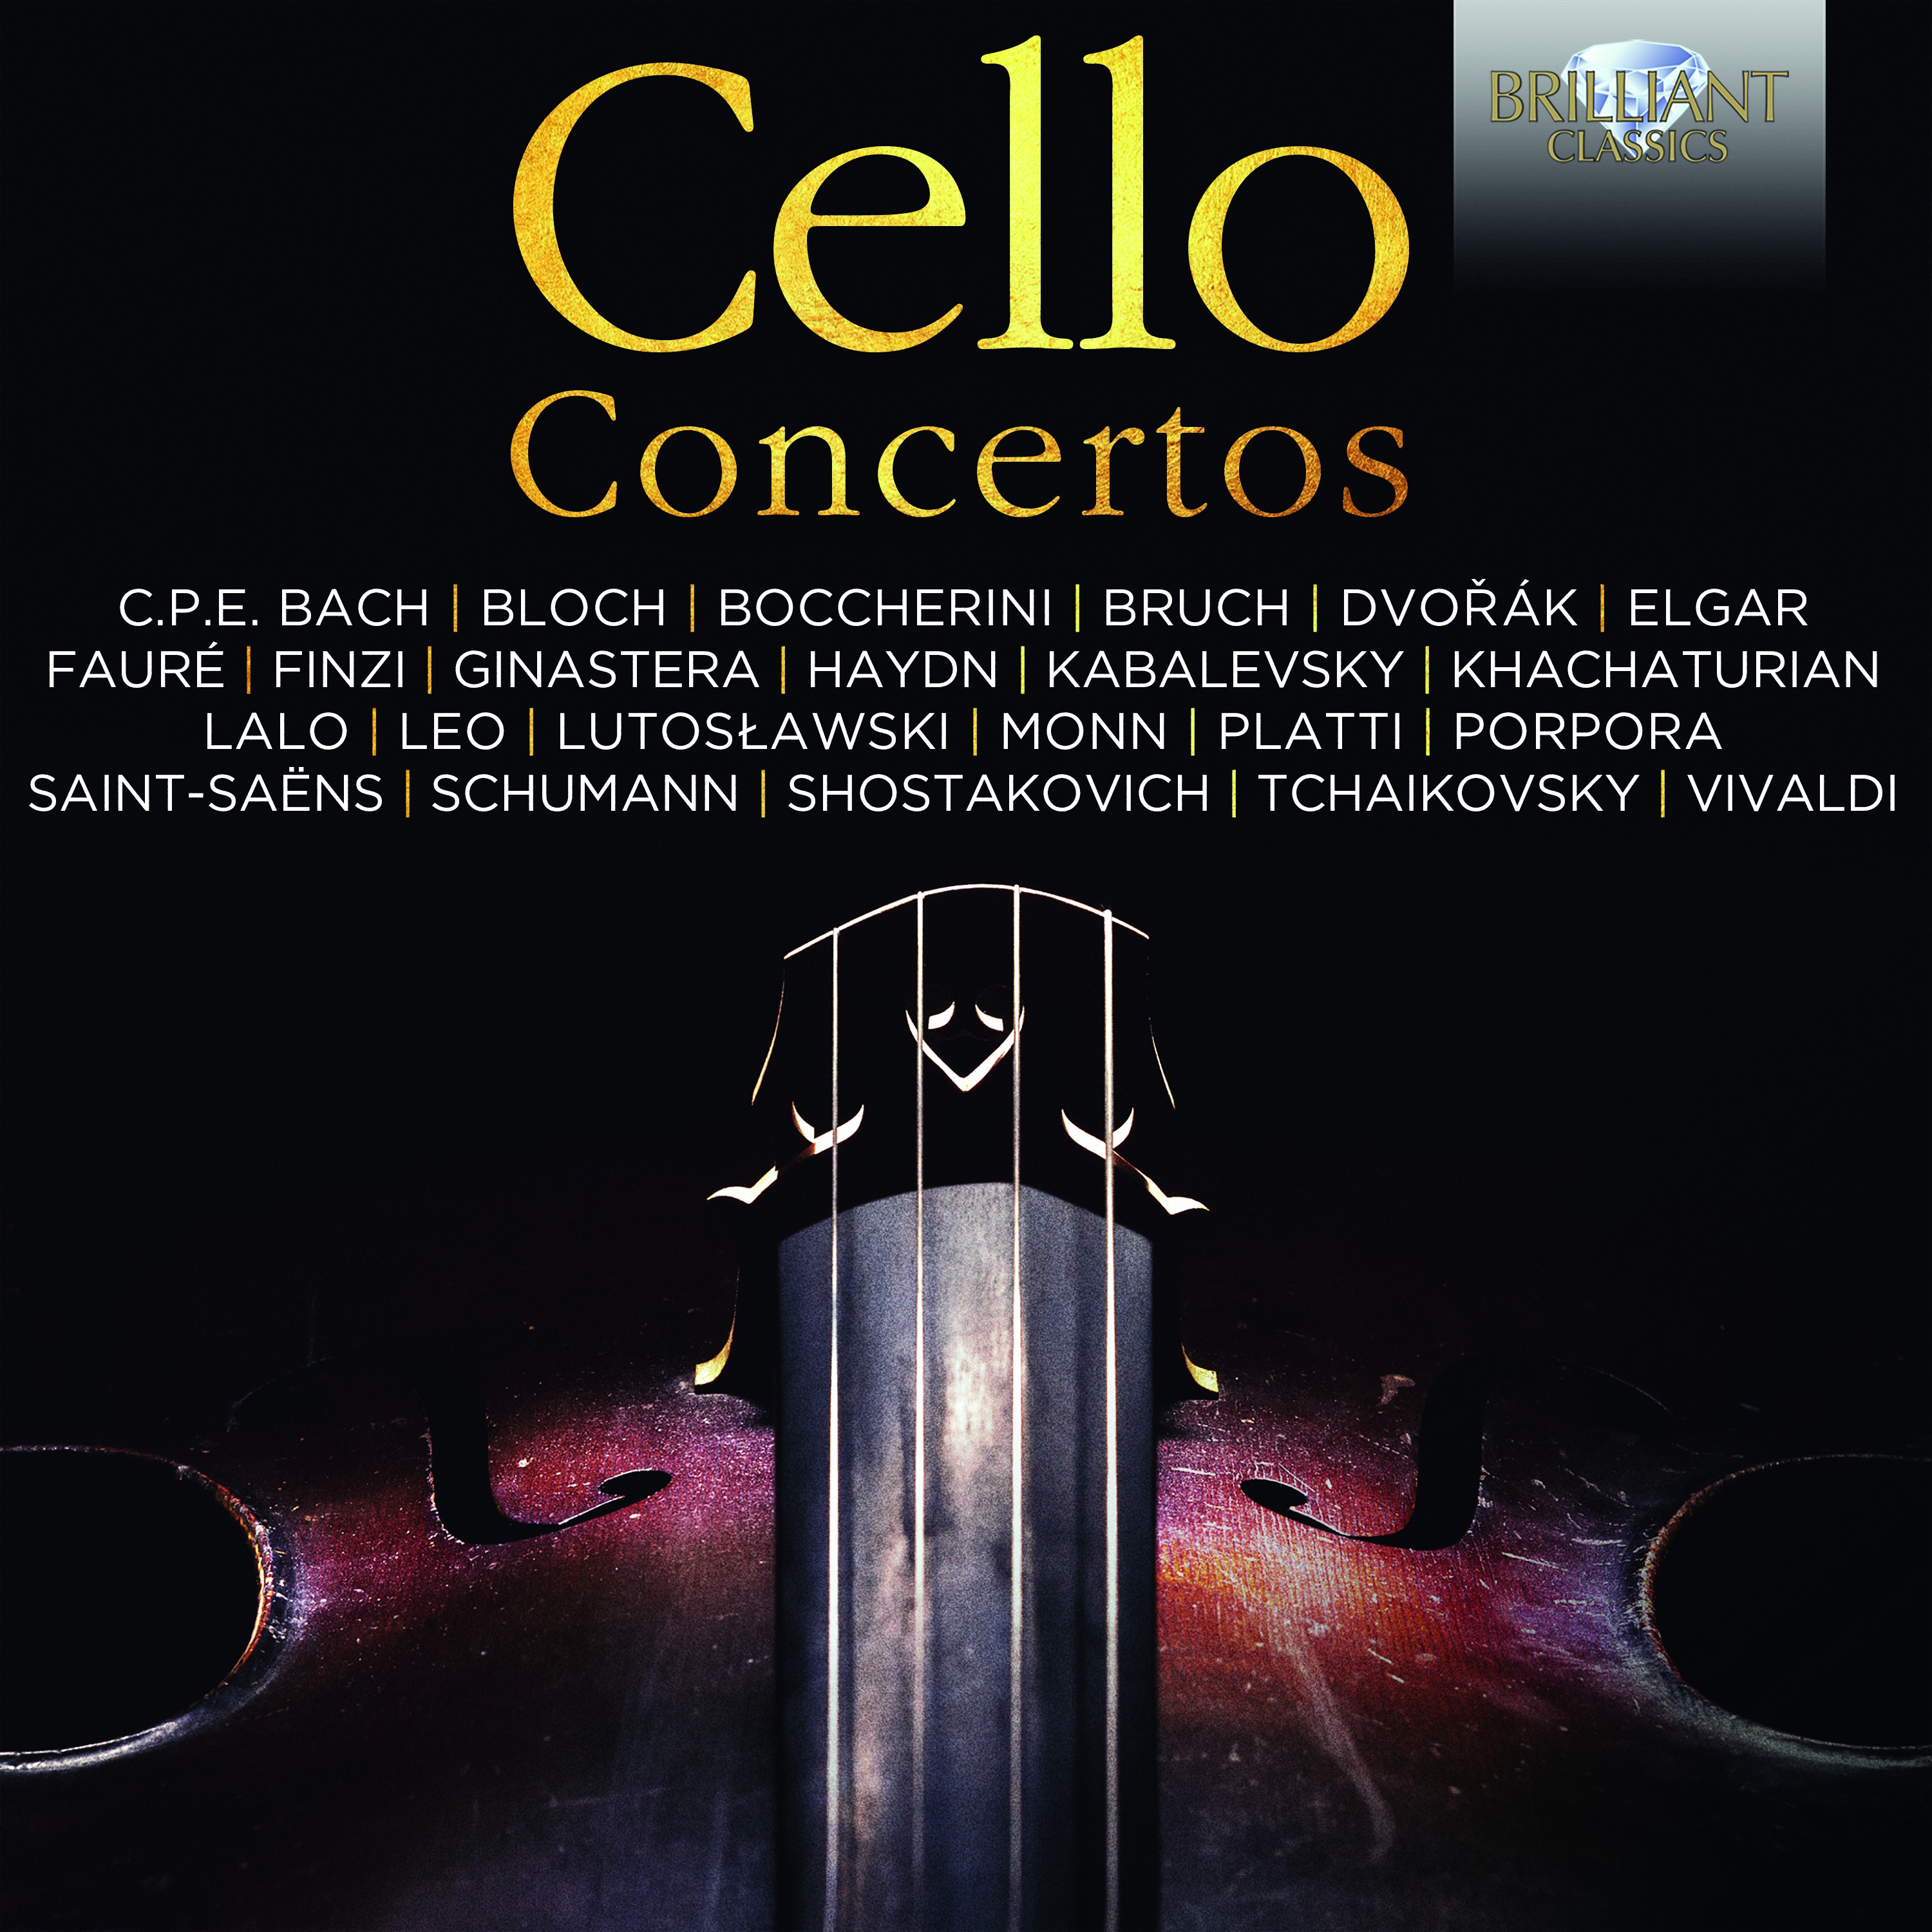 Cello Concerto No. 1, Op. 36: III. Assai mosso ed esaltato - Largo amoroso